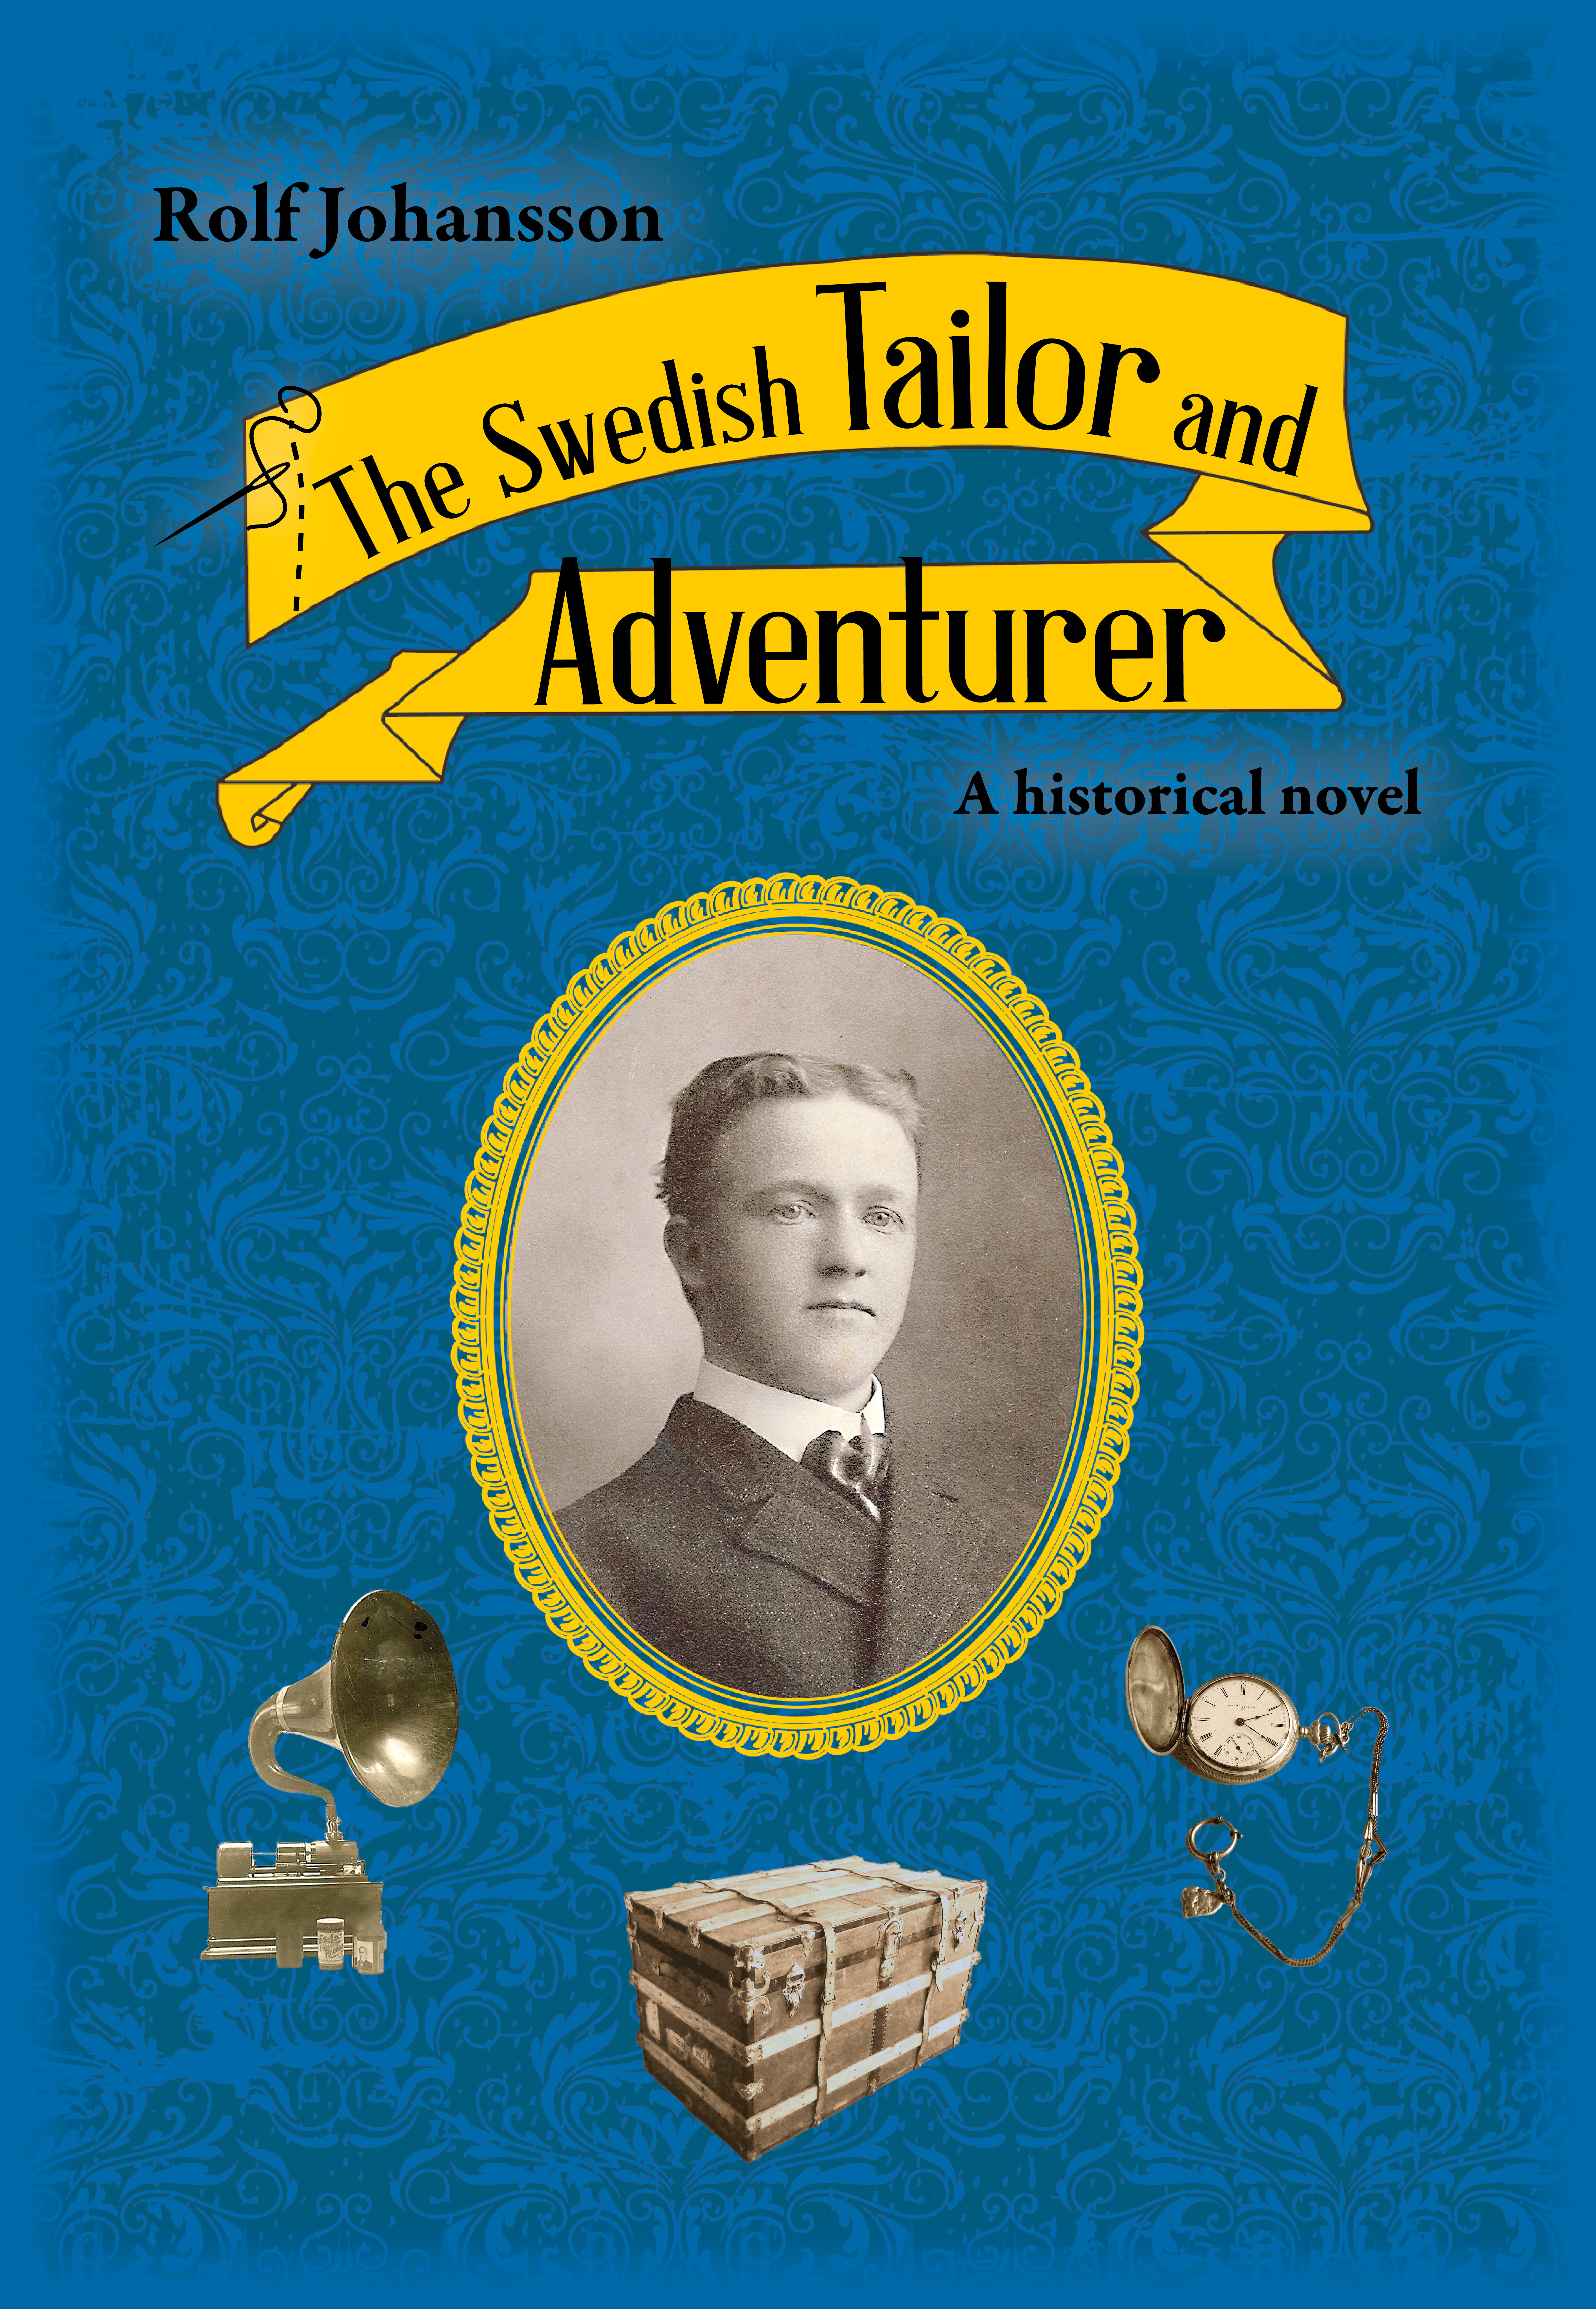 Ny ebok: The Swedish Tailor and Adventurer